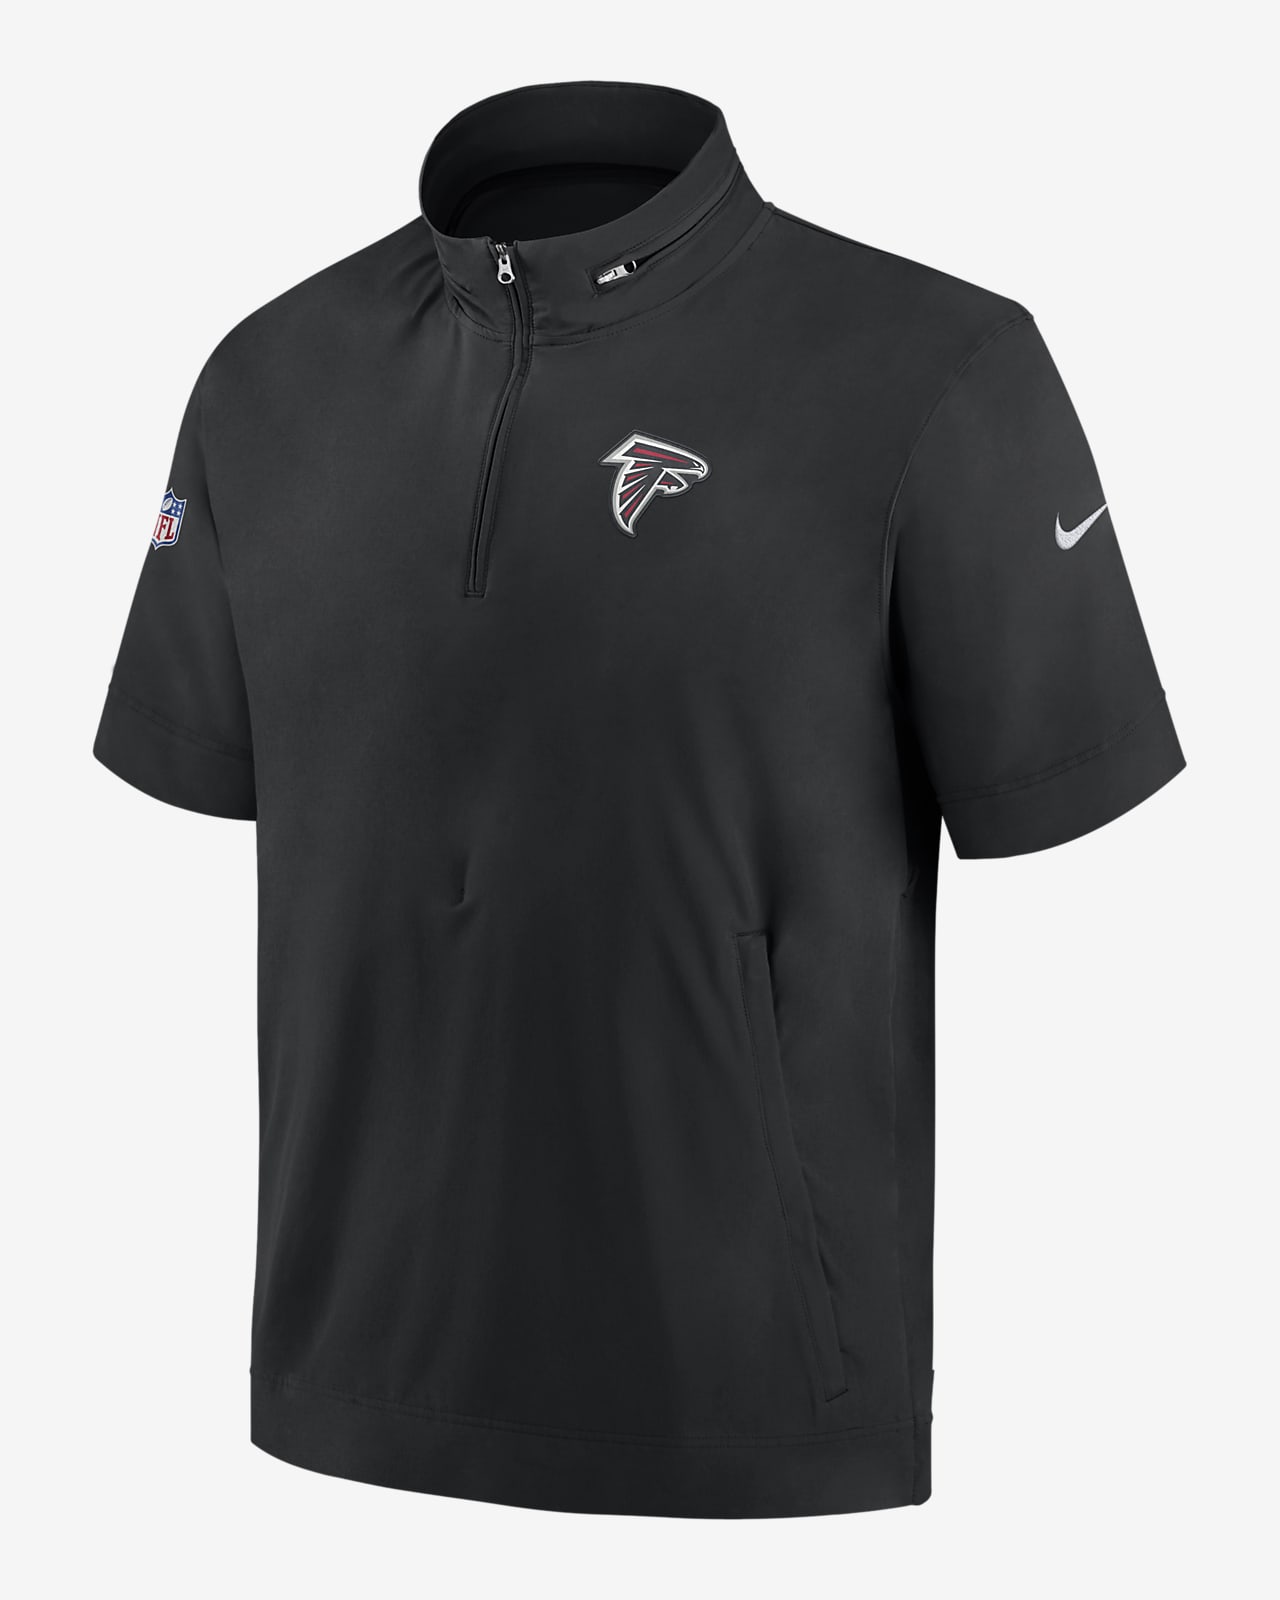 Nike Sideline Coach (NFL Atlanta Falcons) Men's Short-Sleeve Jacket